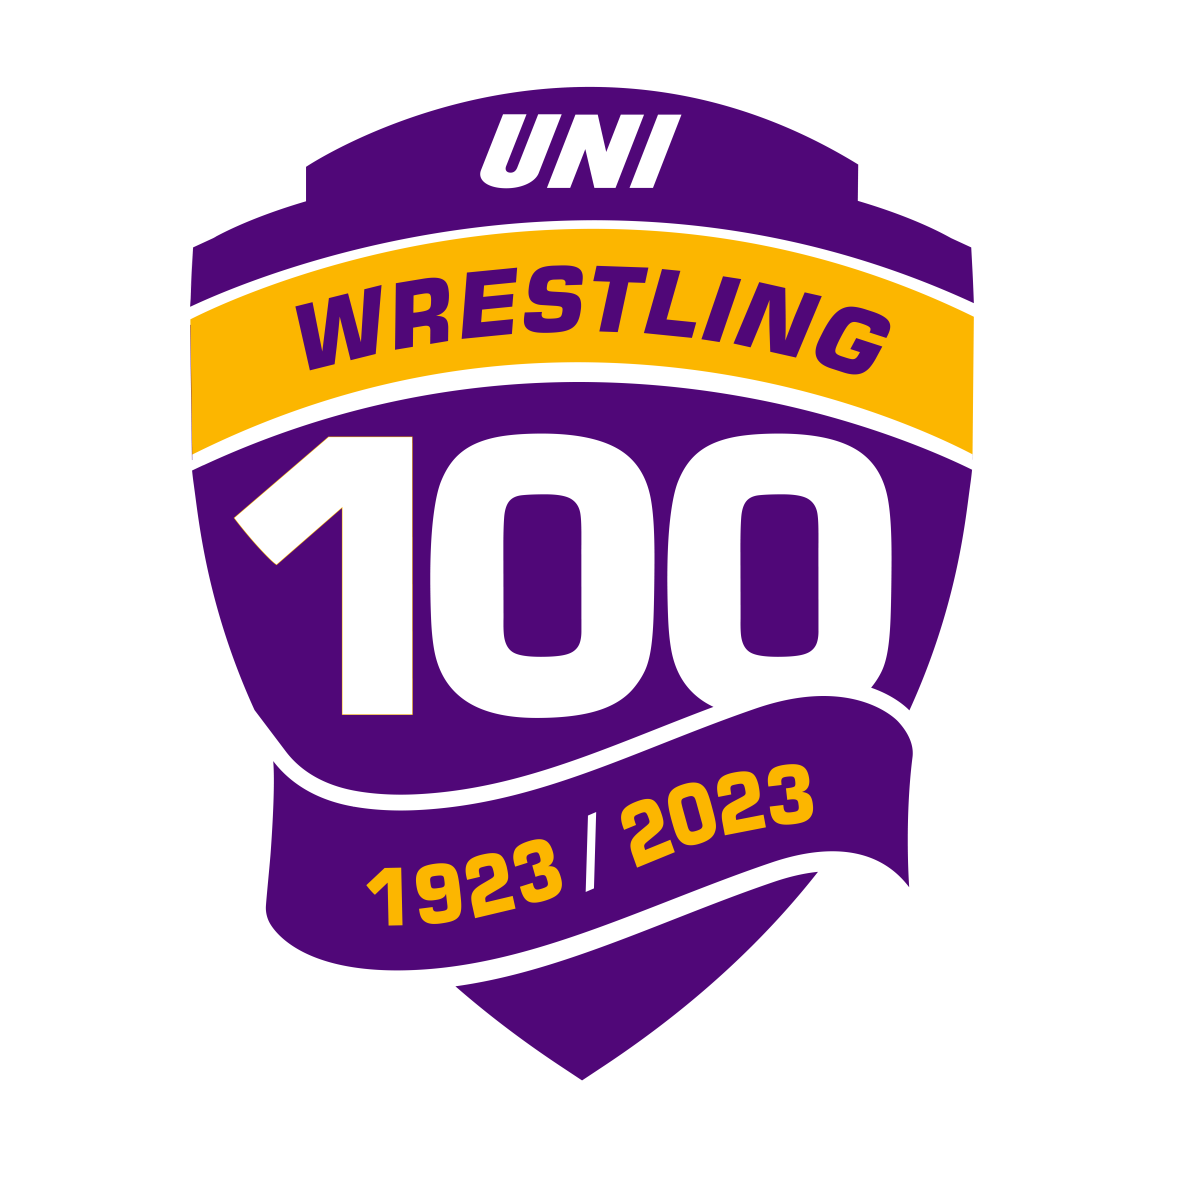 UNI Wrestling 100 1923/2023